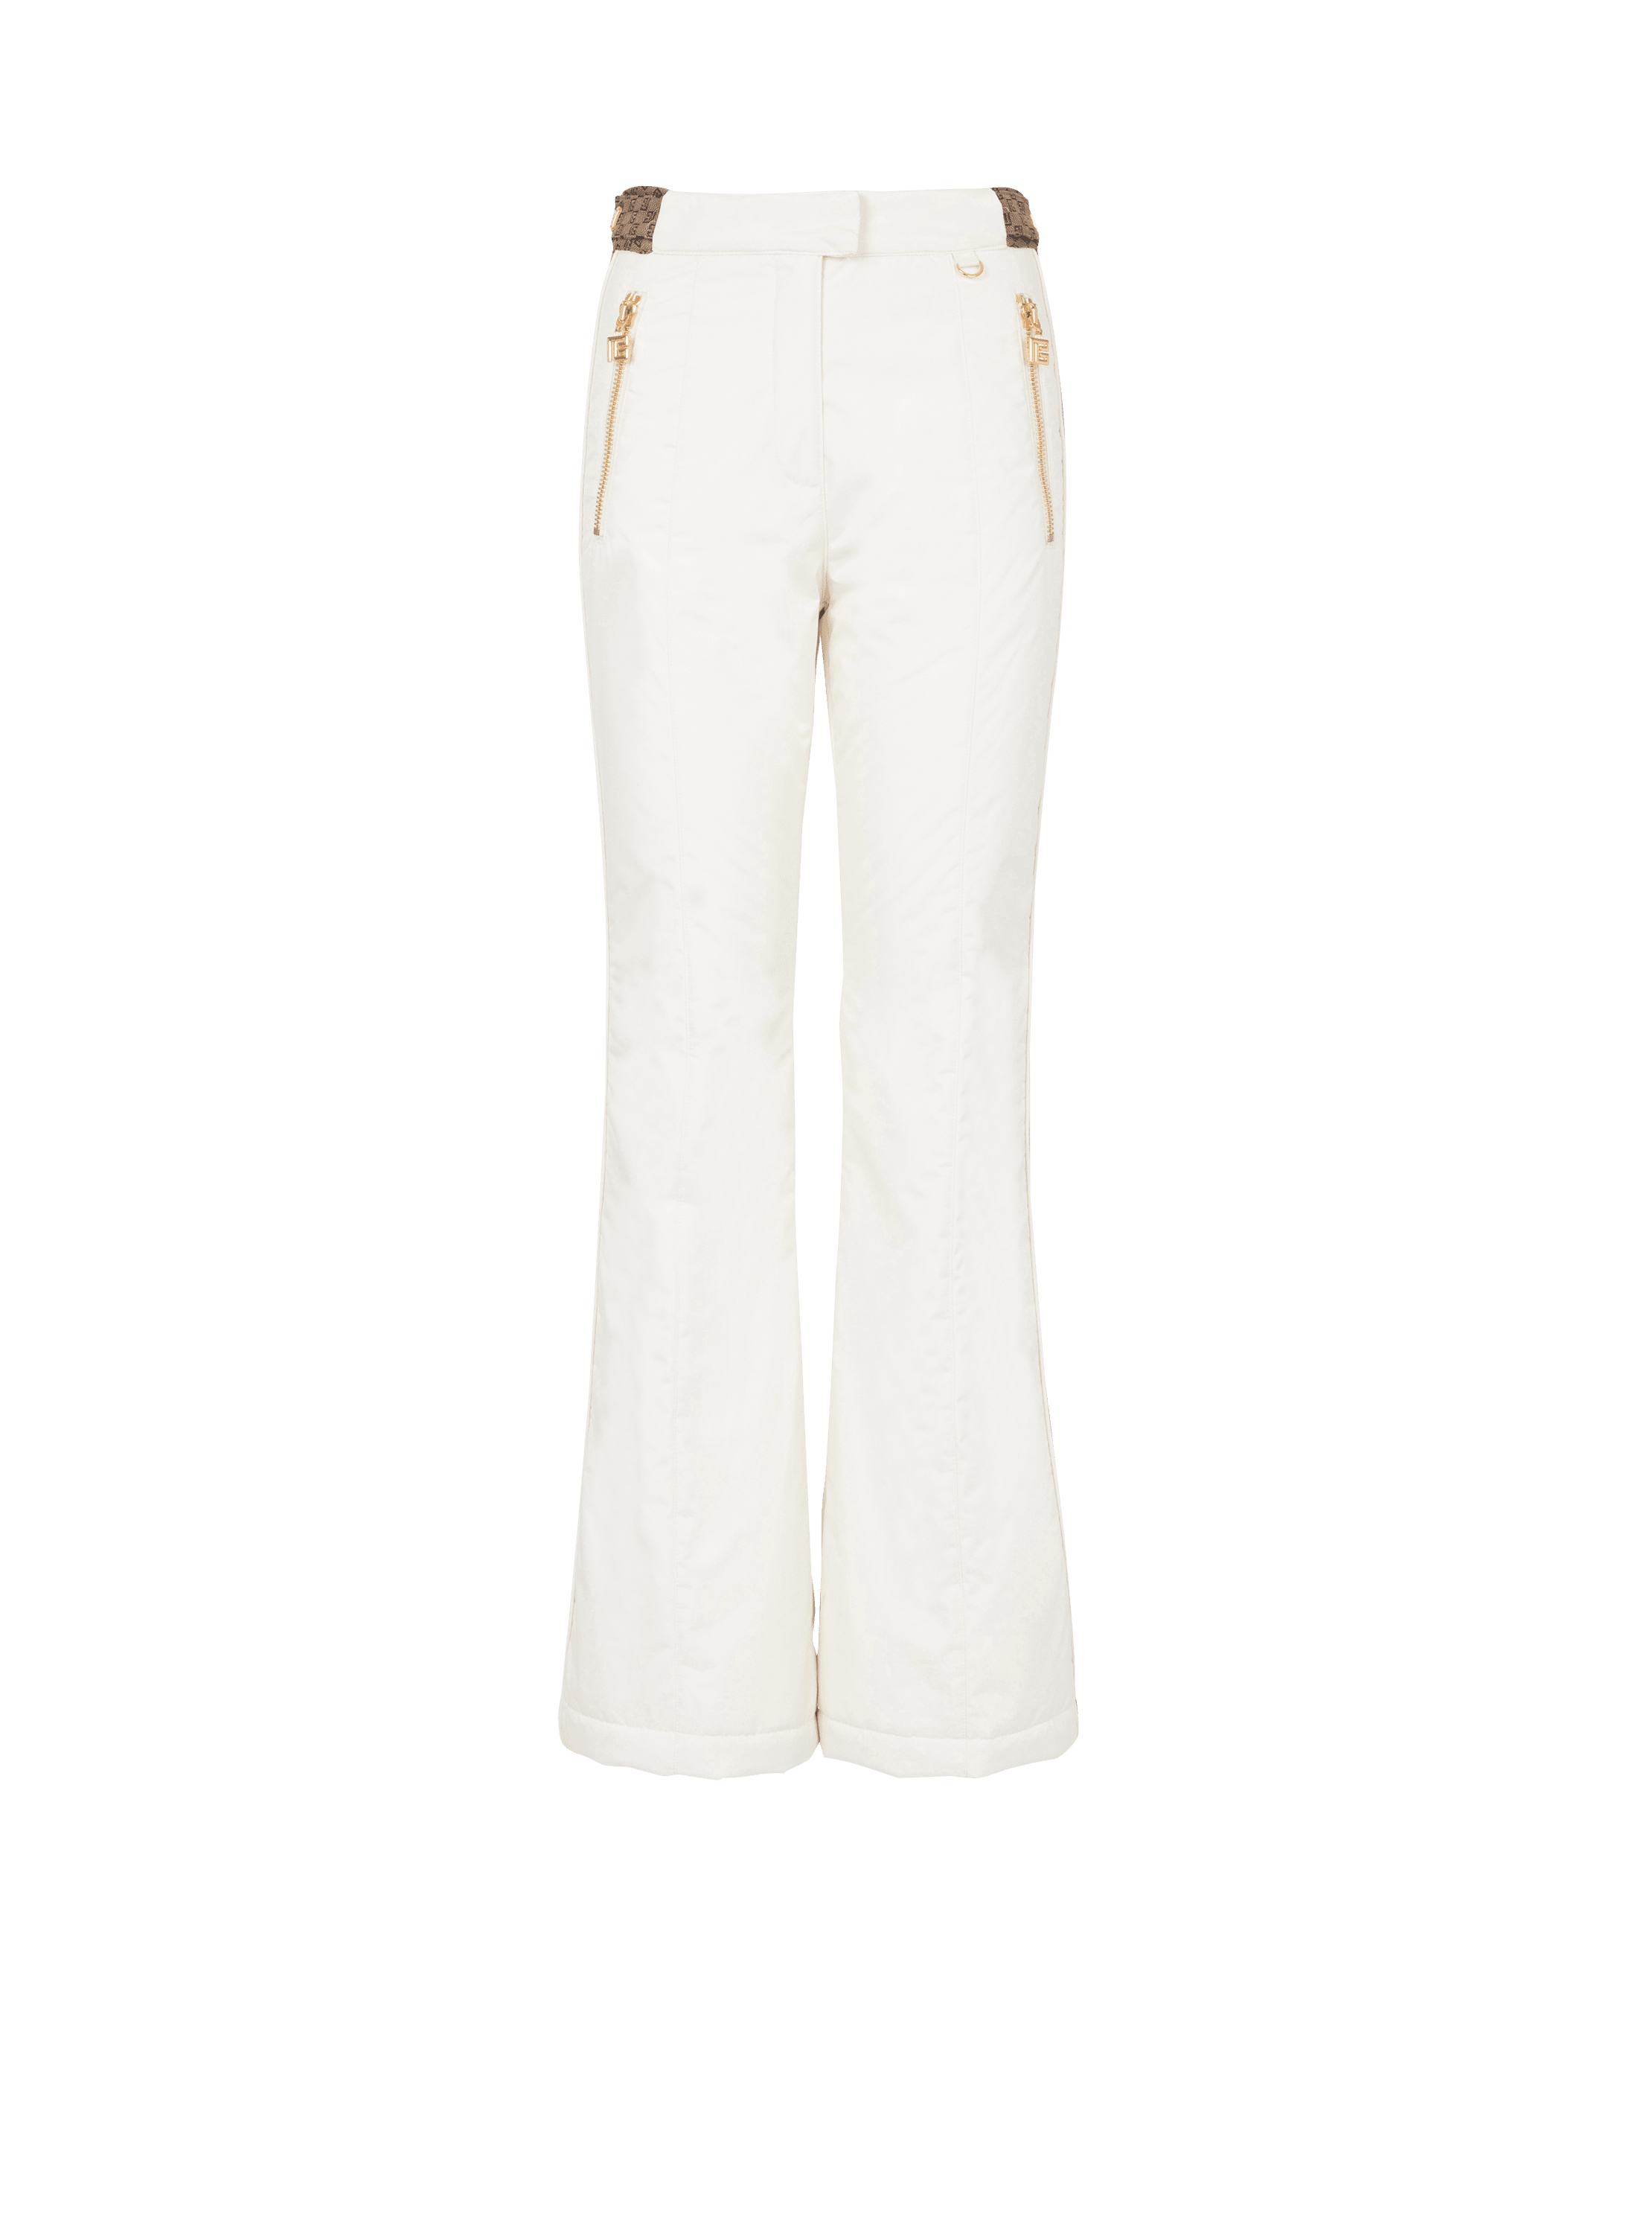 Ski trousers, white, hi-res